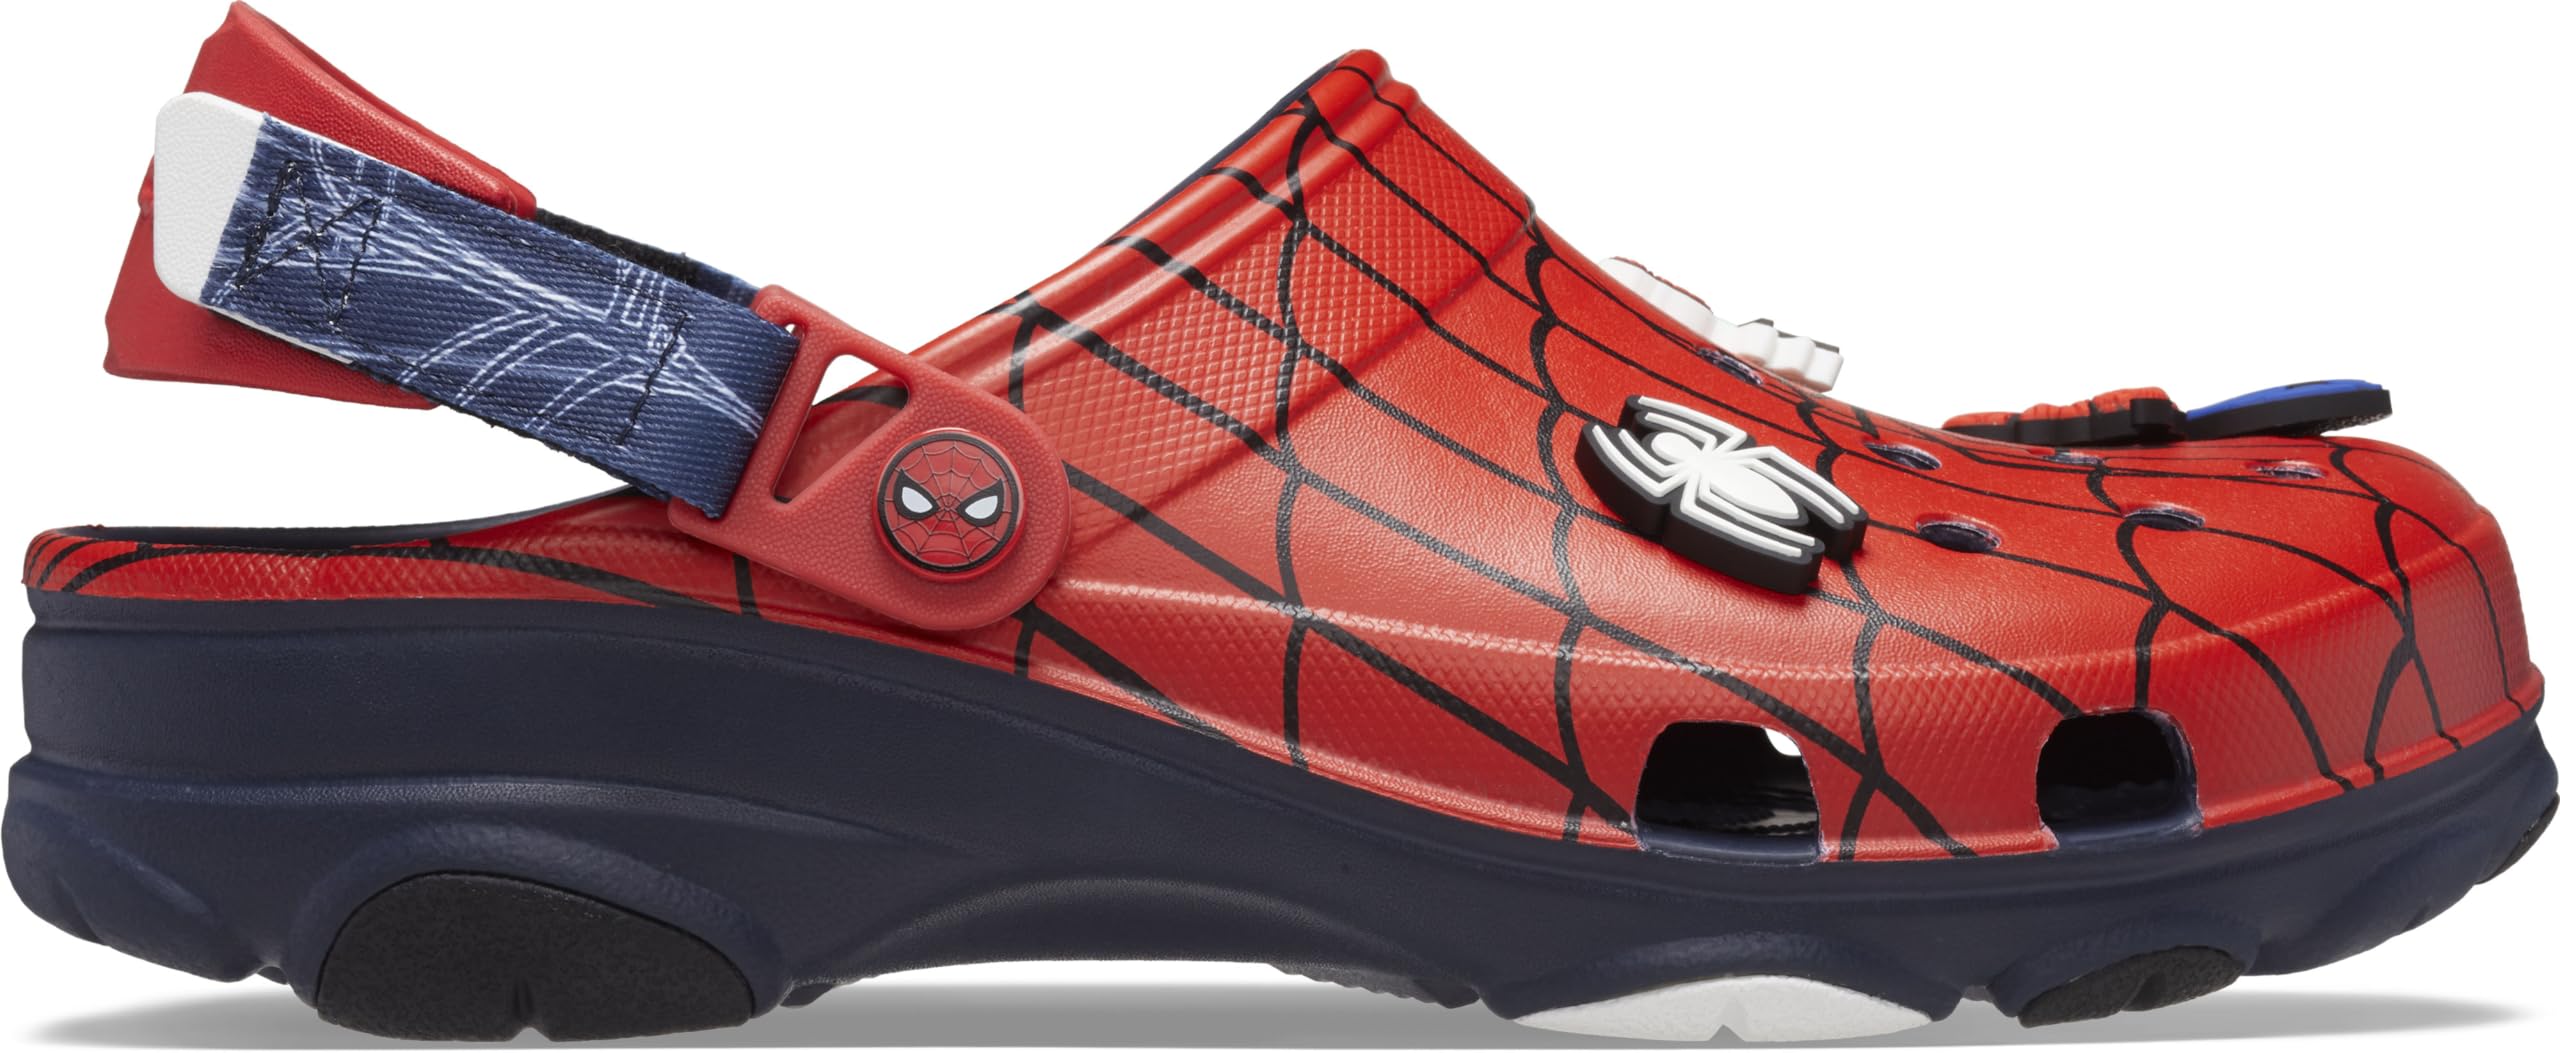 Crocs Unisex-Adult Marvel Superhero Clogs, Spiderman, Black Panther and Captain America Shoes